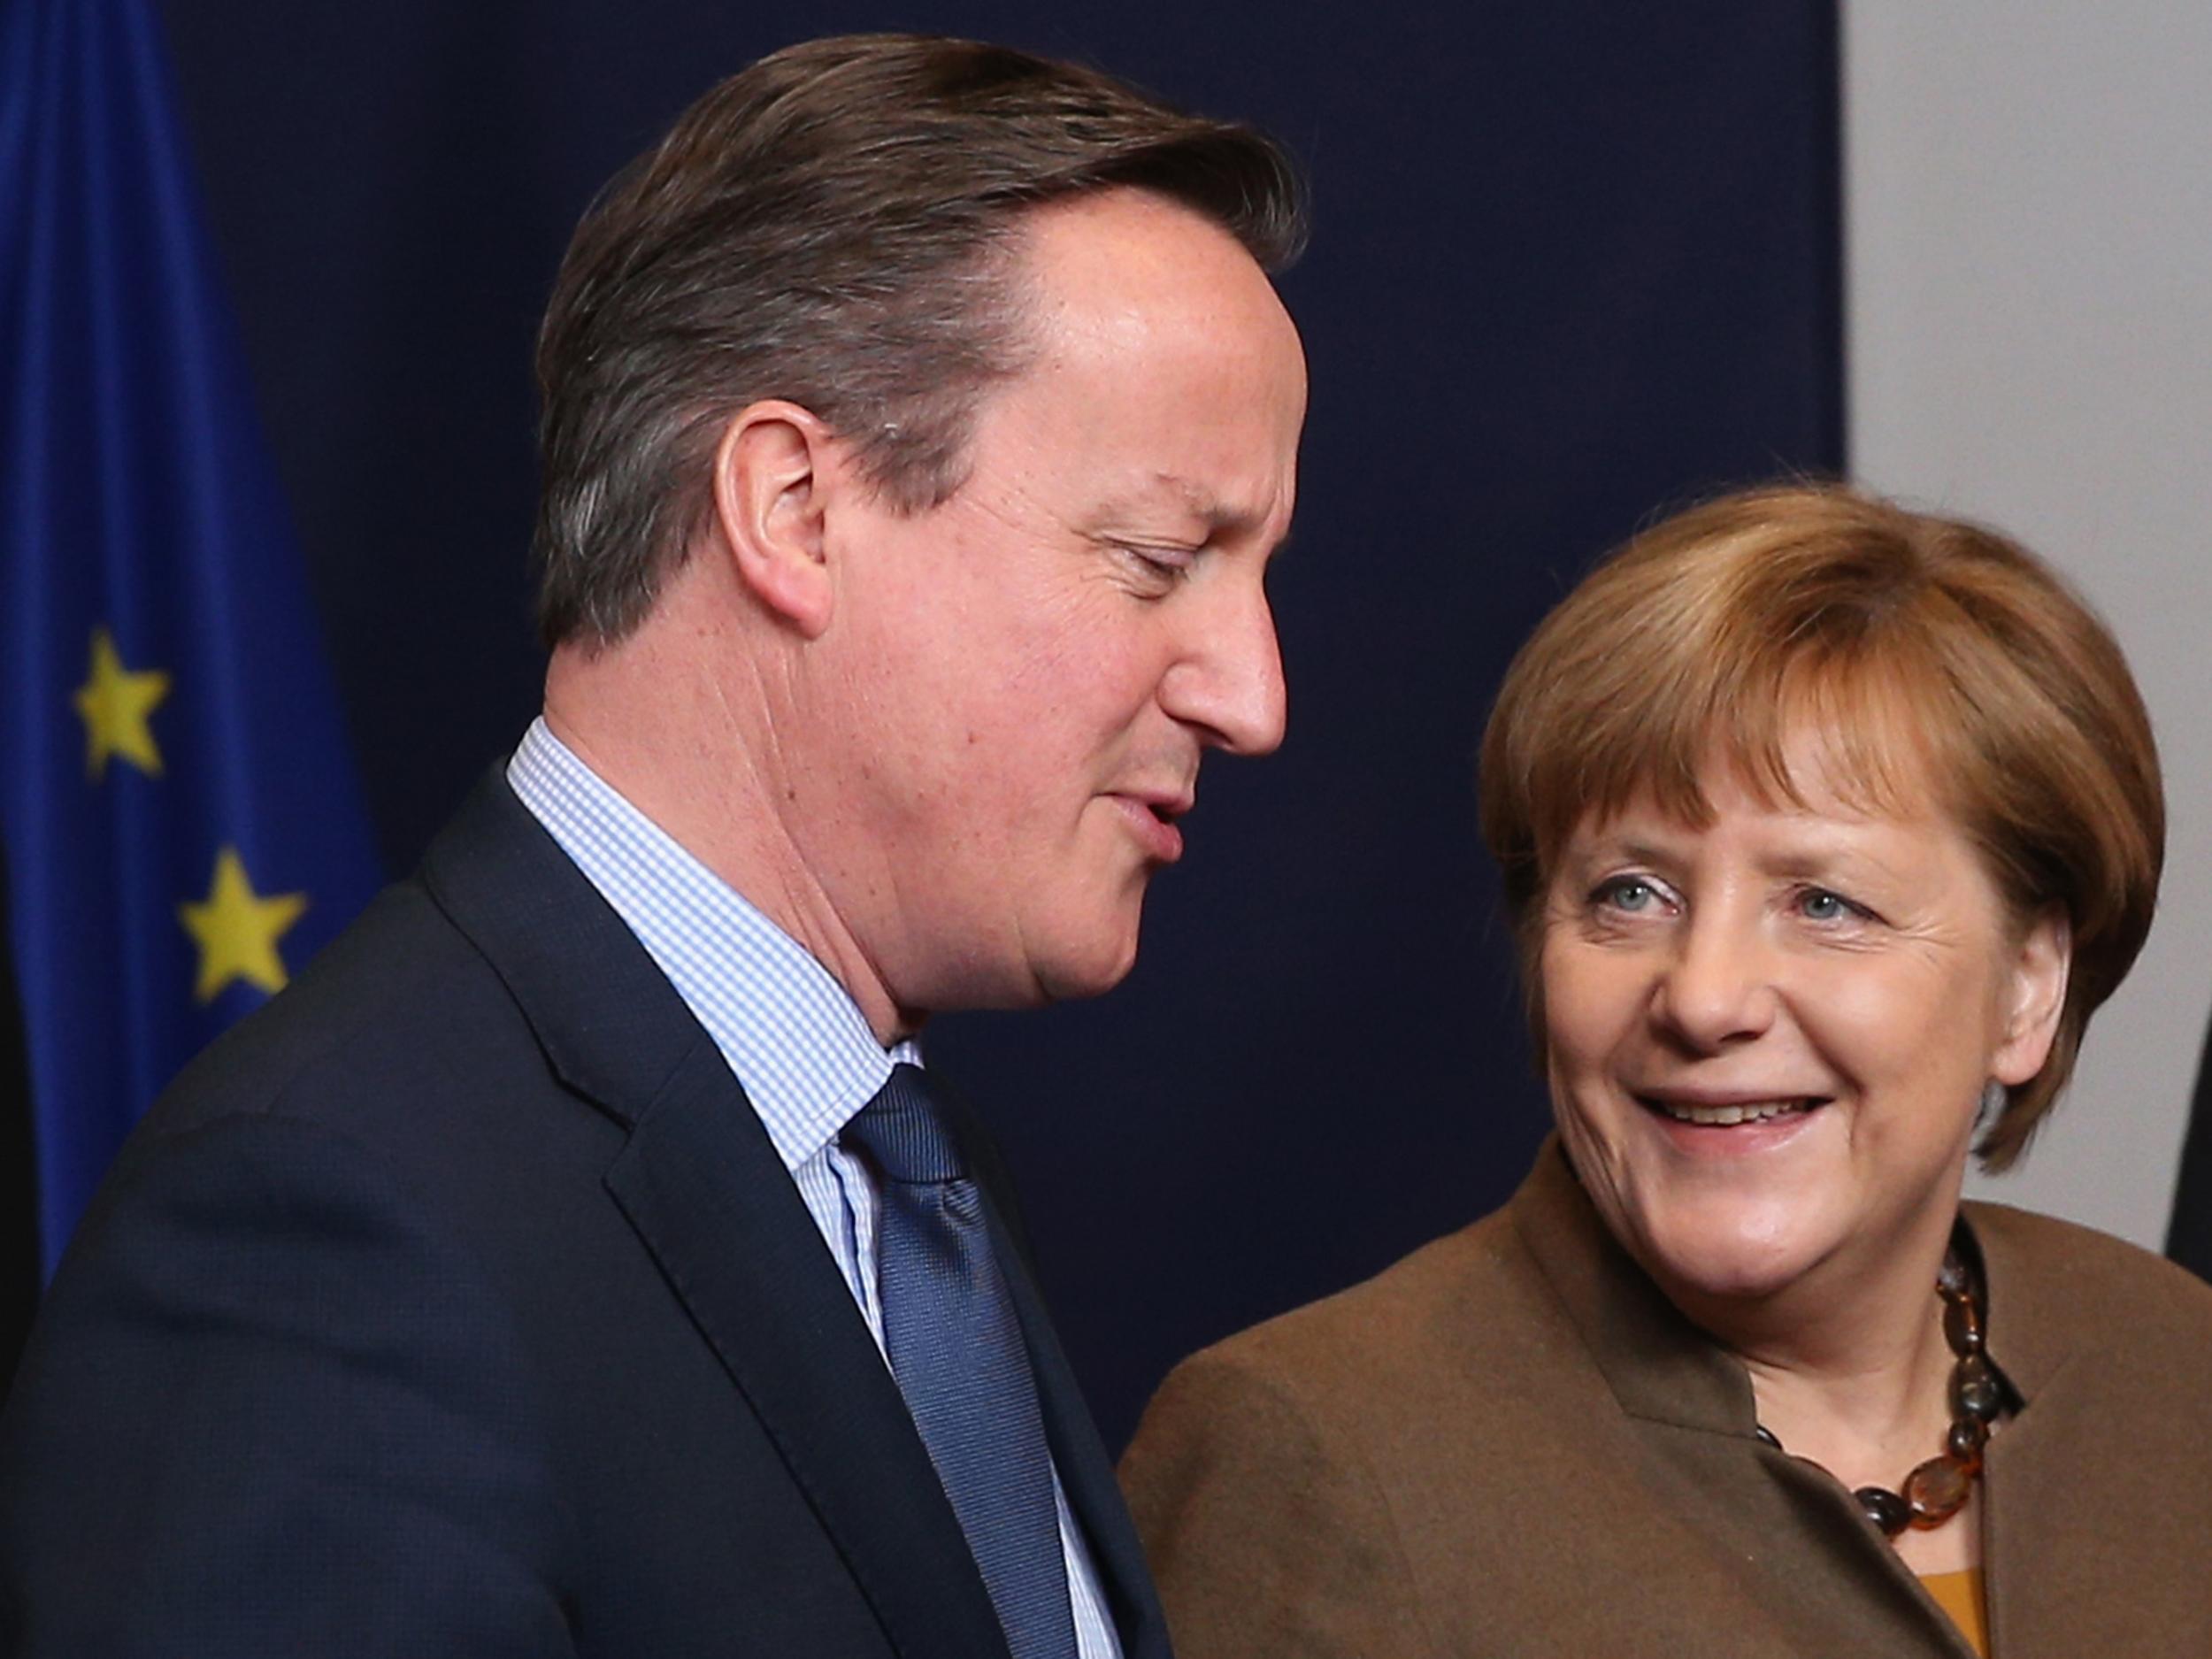 Mr Cameron with German Chancellor Angela Merkel